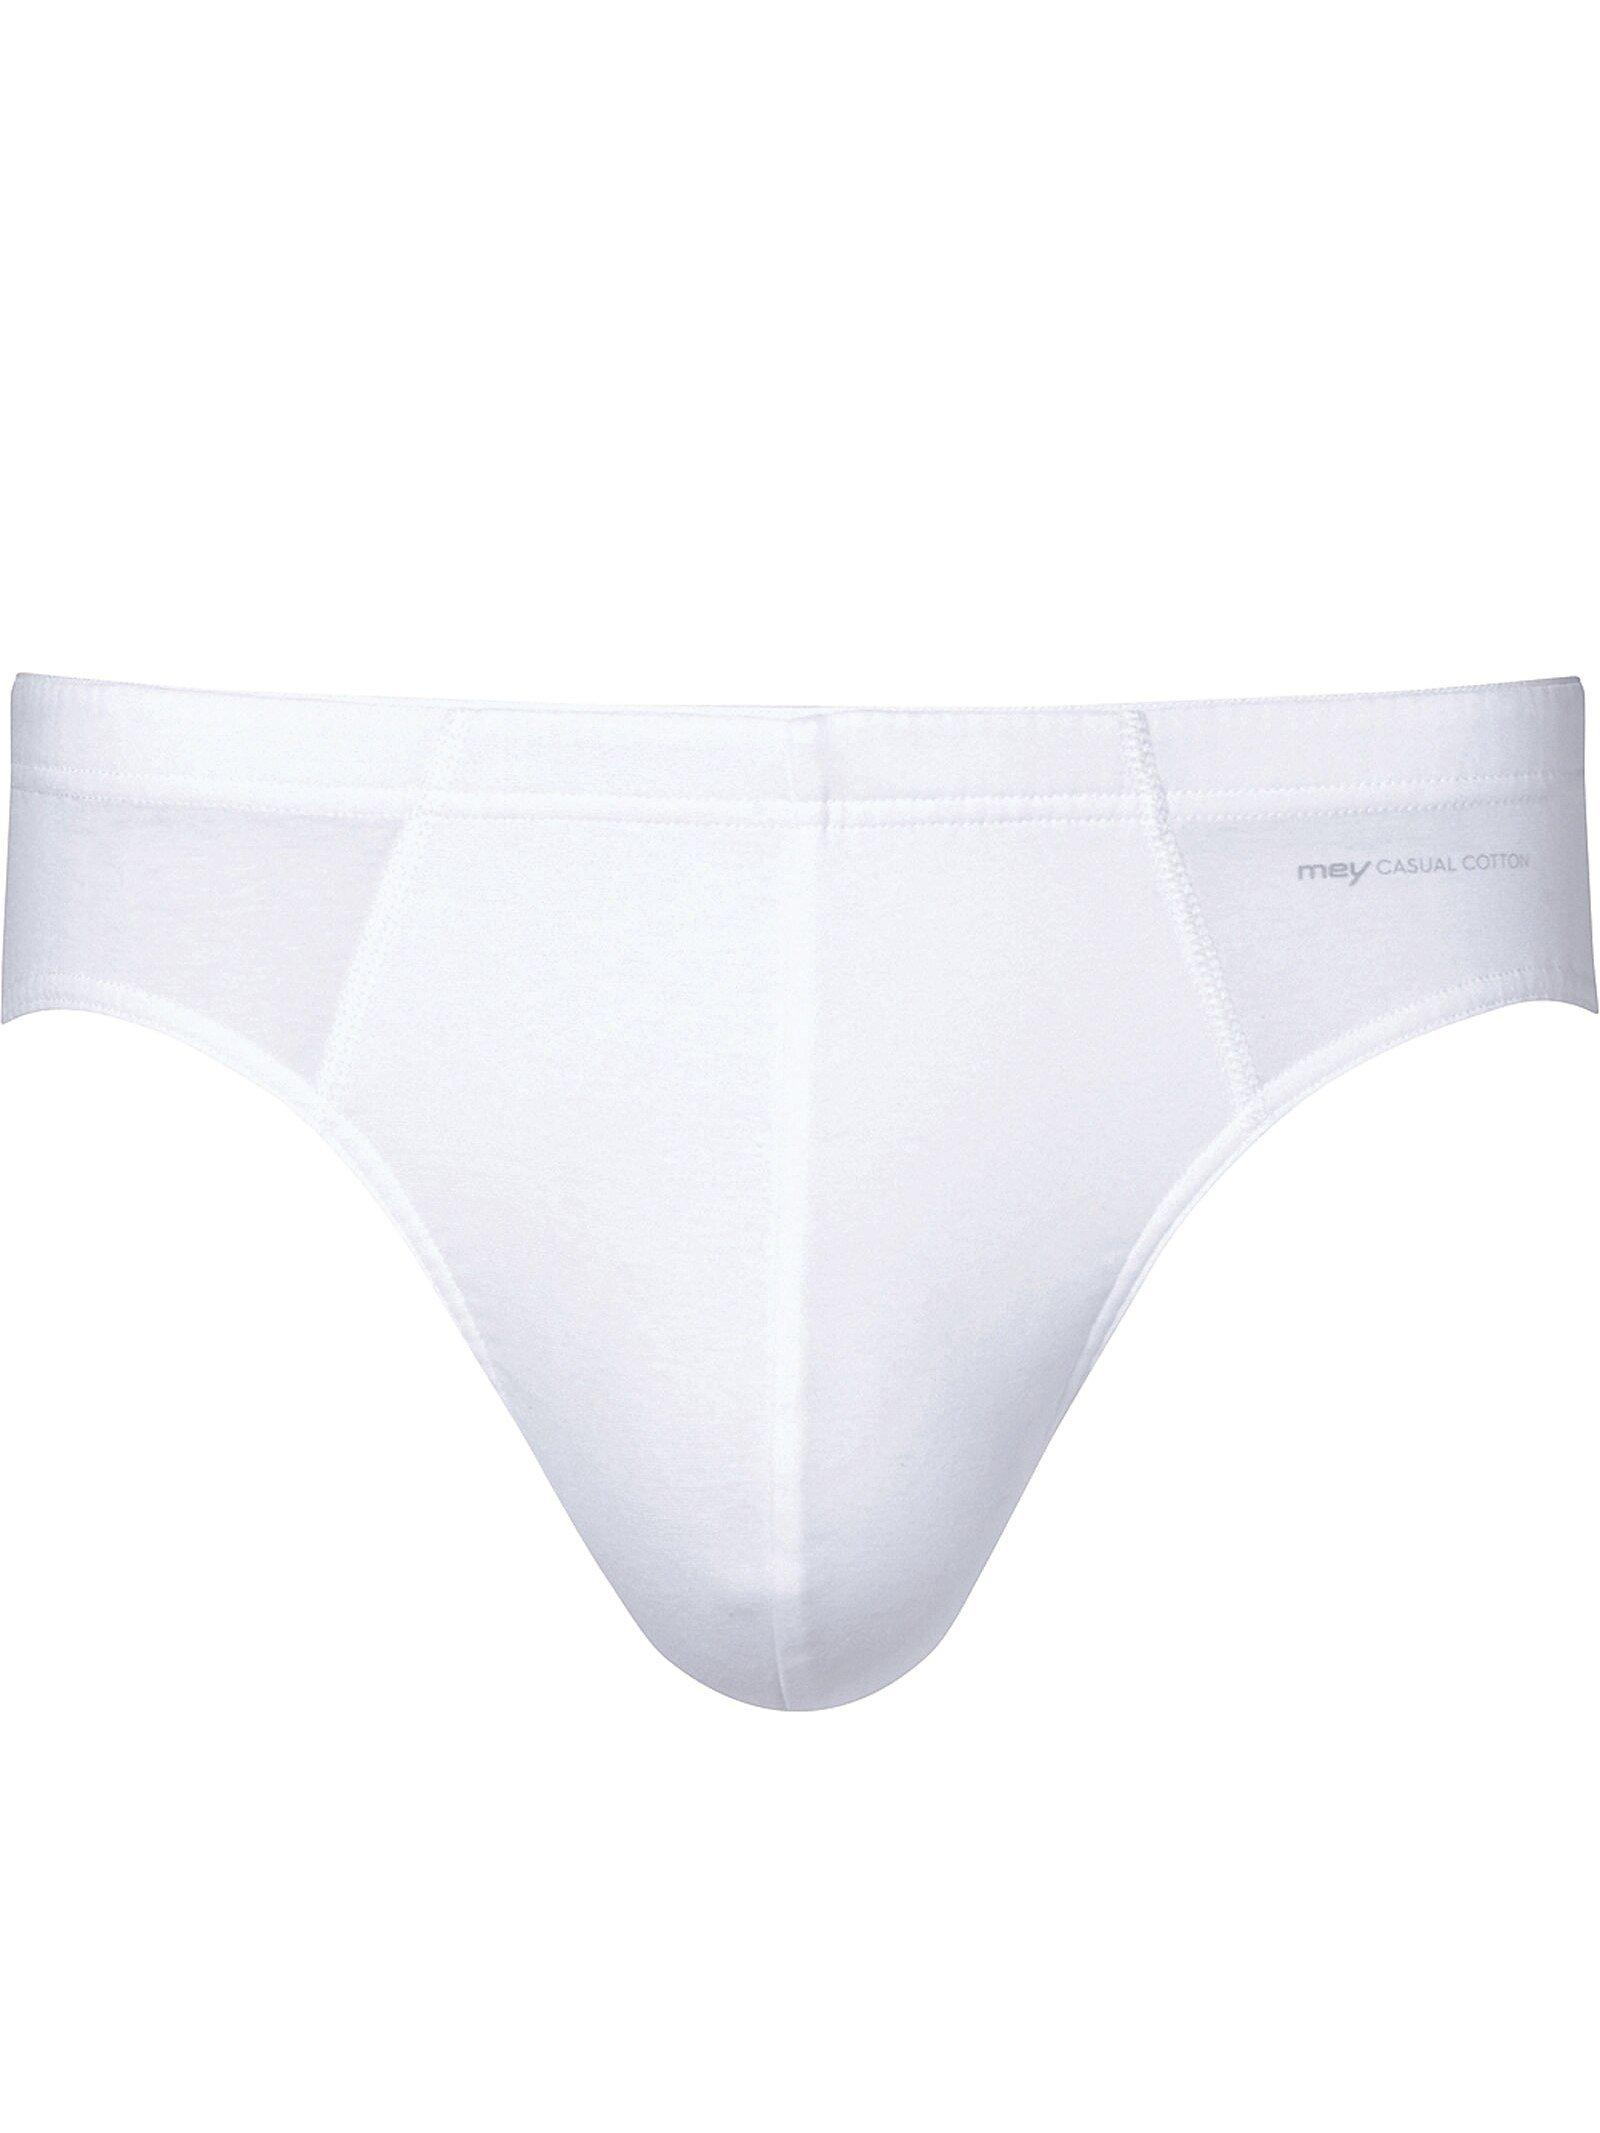 Mey - Casual Cotton sports briefs - white